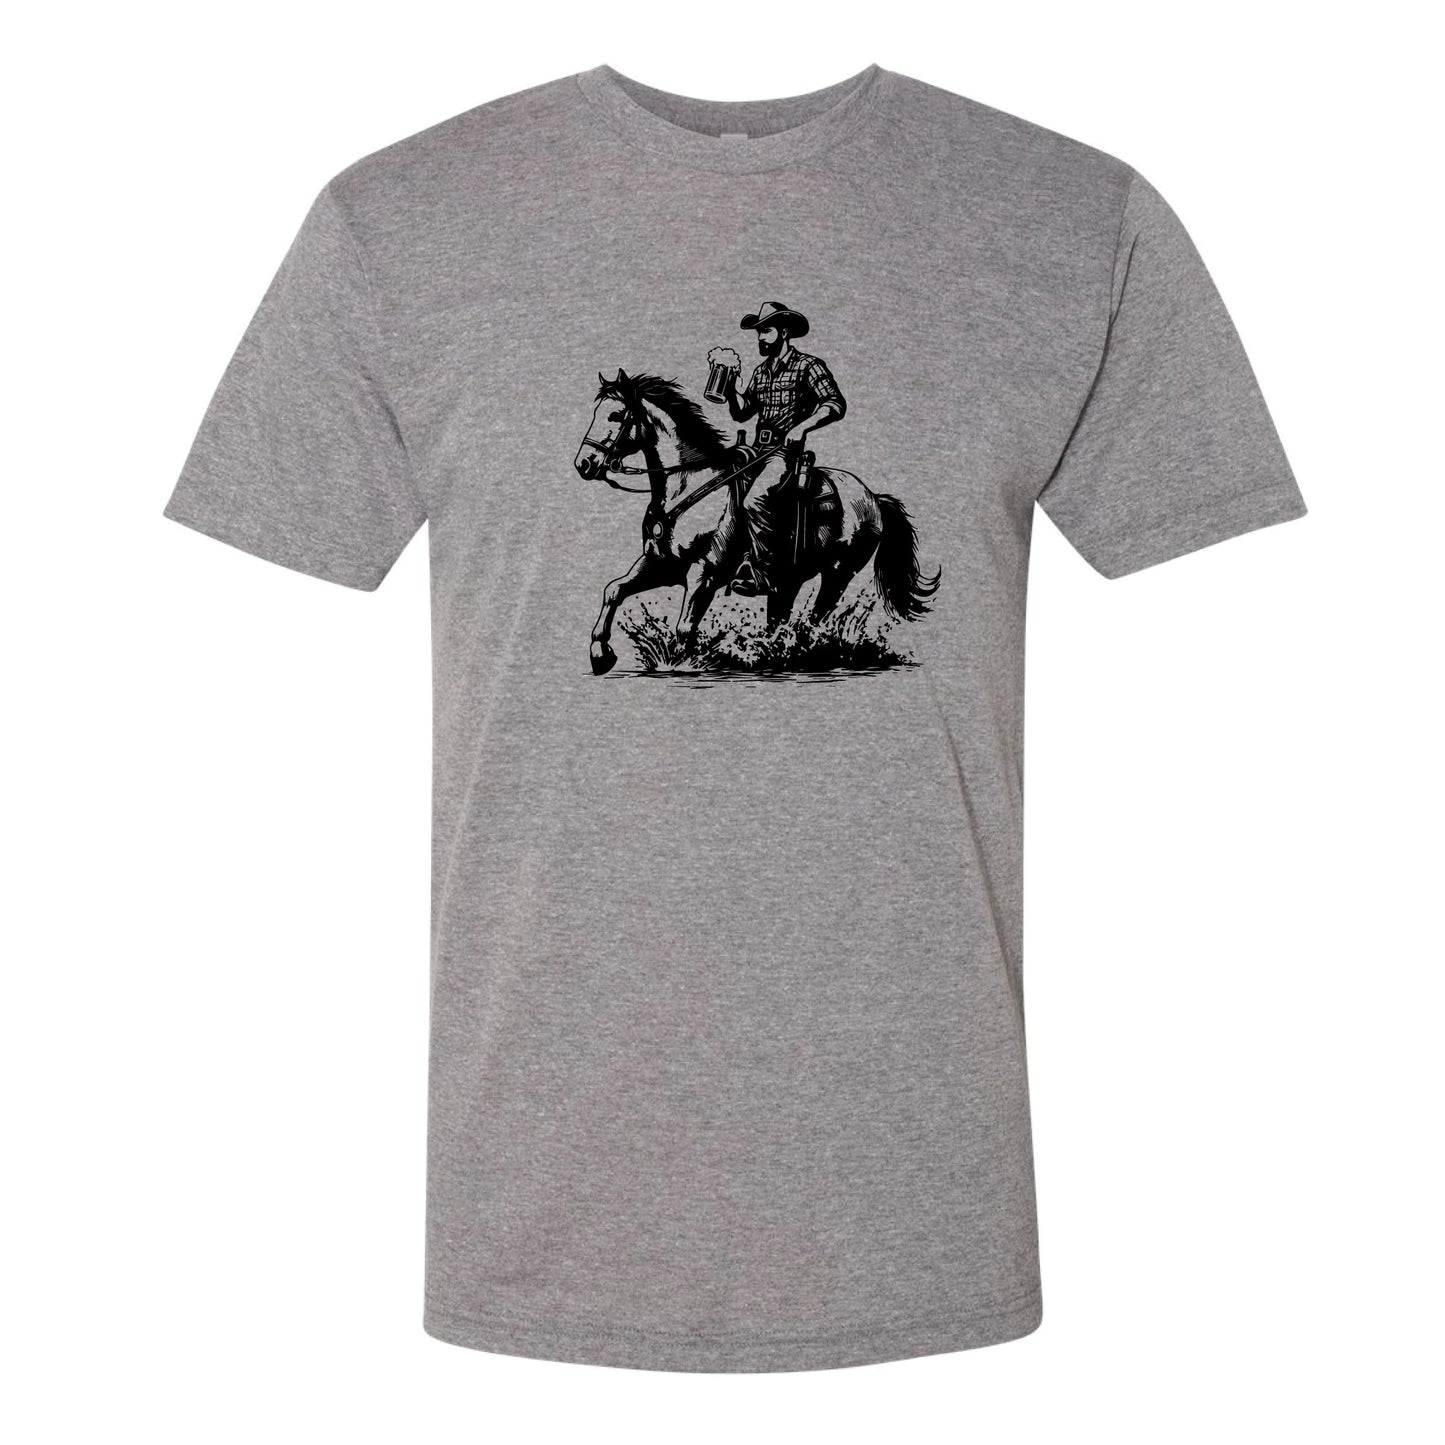 Cowboy Horse Beer T-Shirt